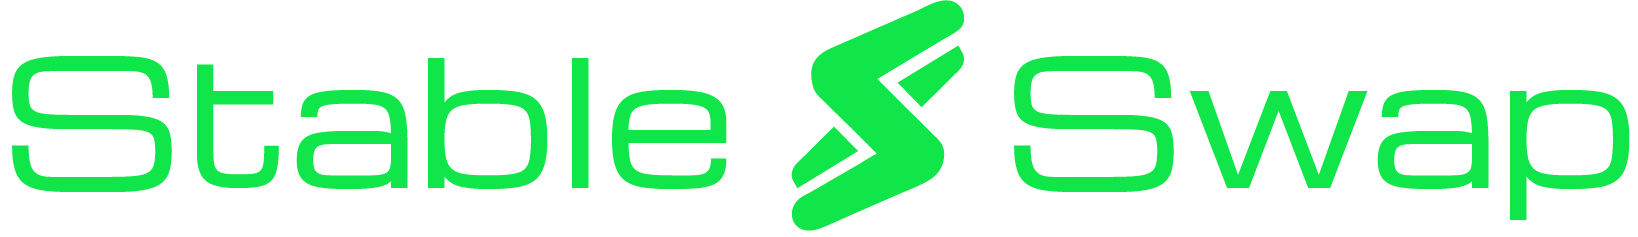 ss_logo